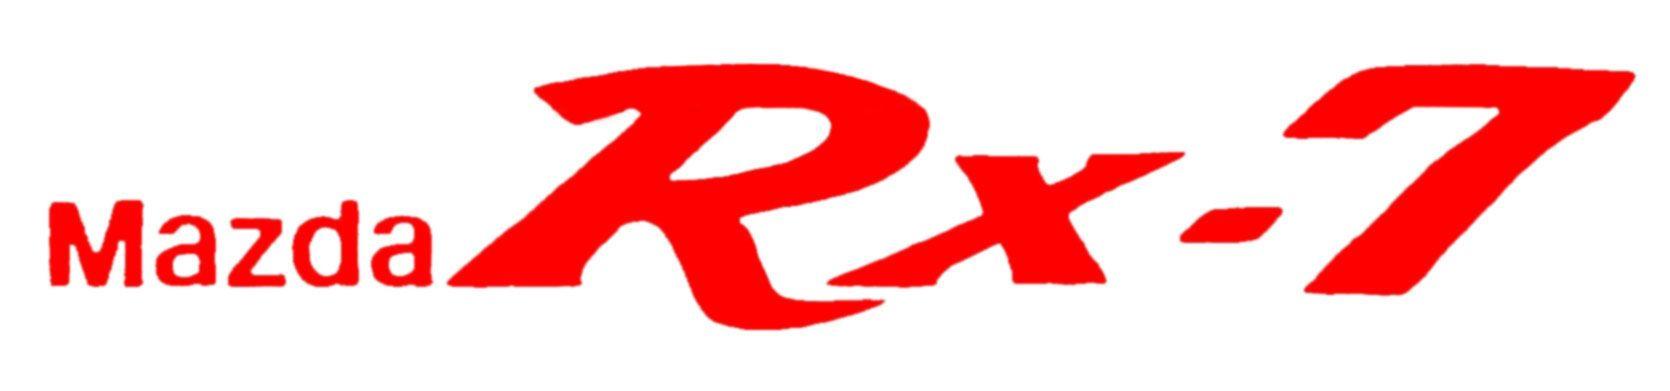 Rx-7 Logo - Index of /images/rx7